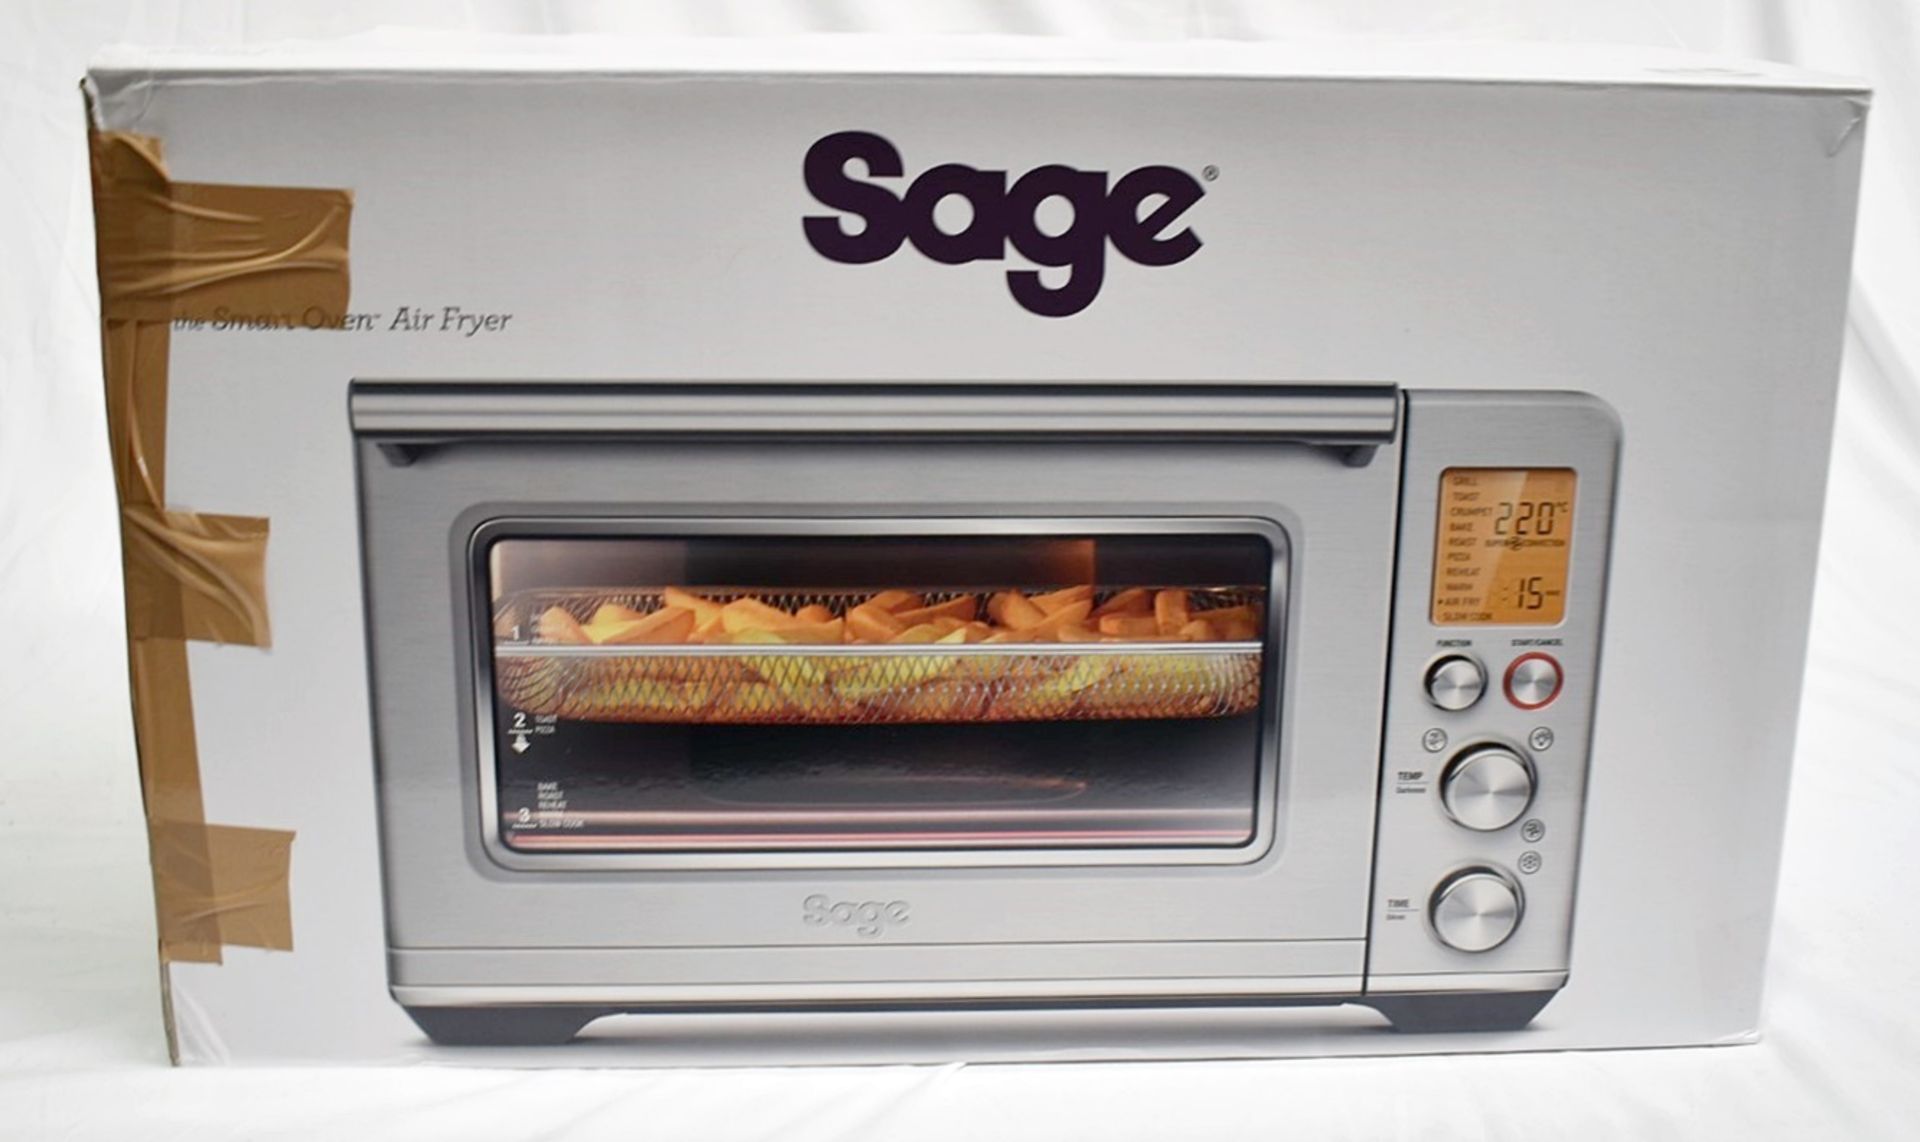 1 x SAGE Smart Oven Air Fryer - Original Price £329.95 - Image 3 of 11